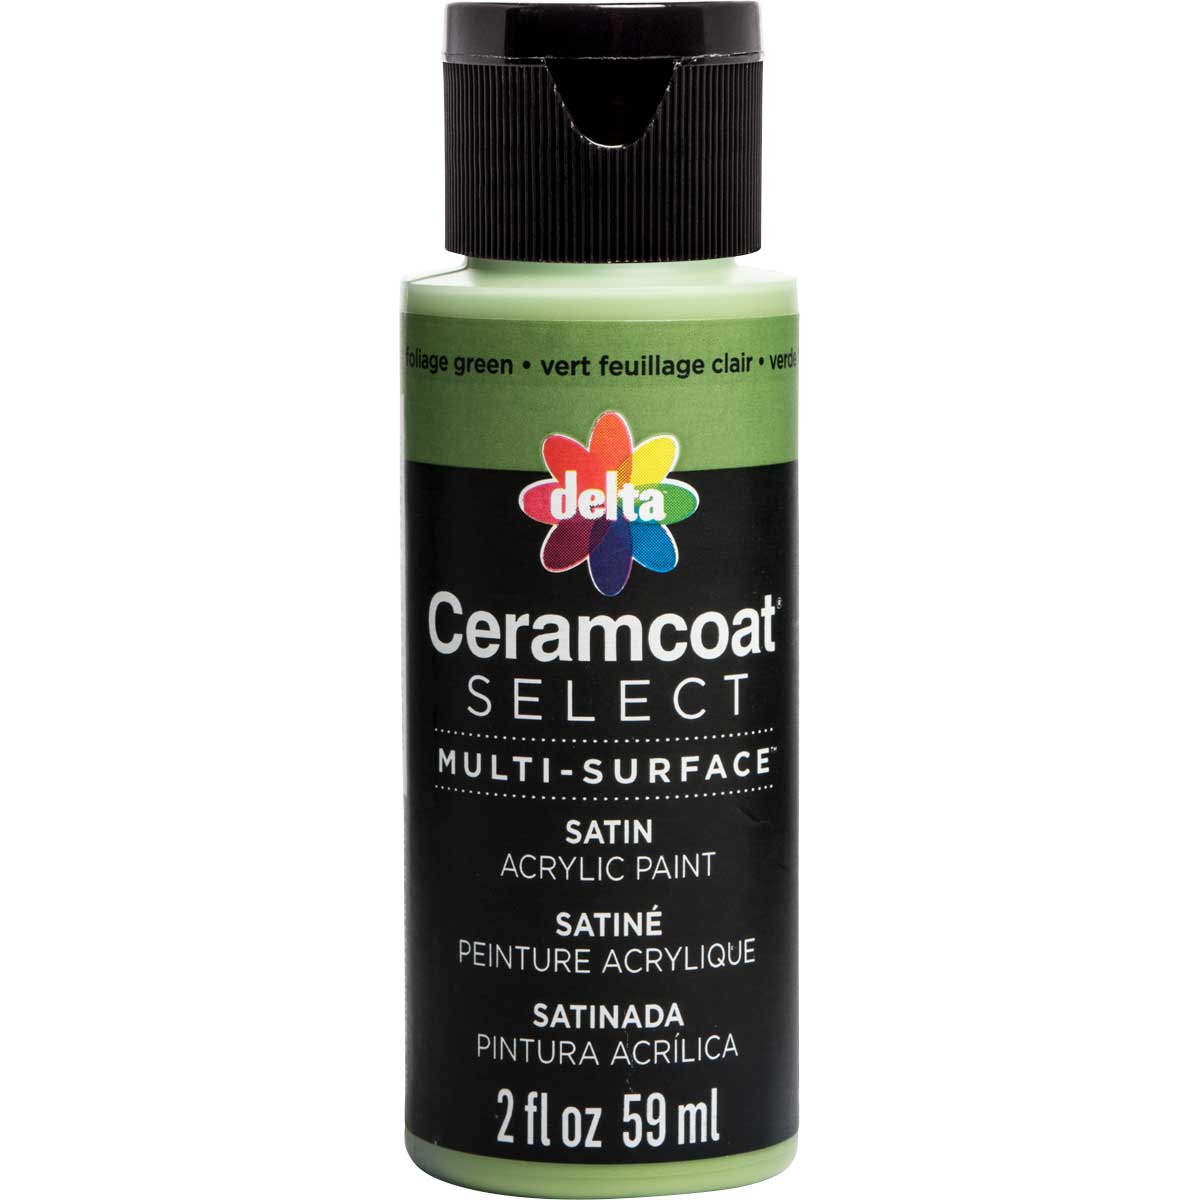 Delta Ceramcoat ® Select Multi-Surface Acrylic Paint - Satin - Light Foliage Green, 2 oz. - 04015